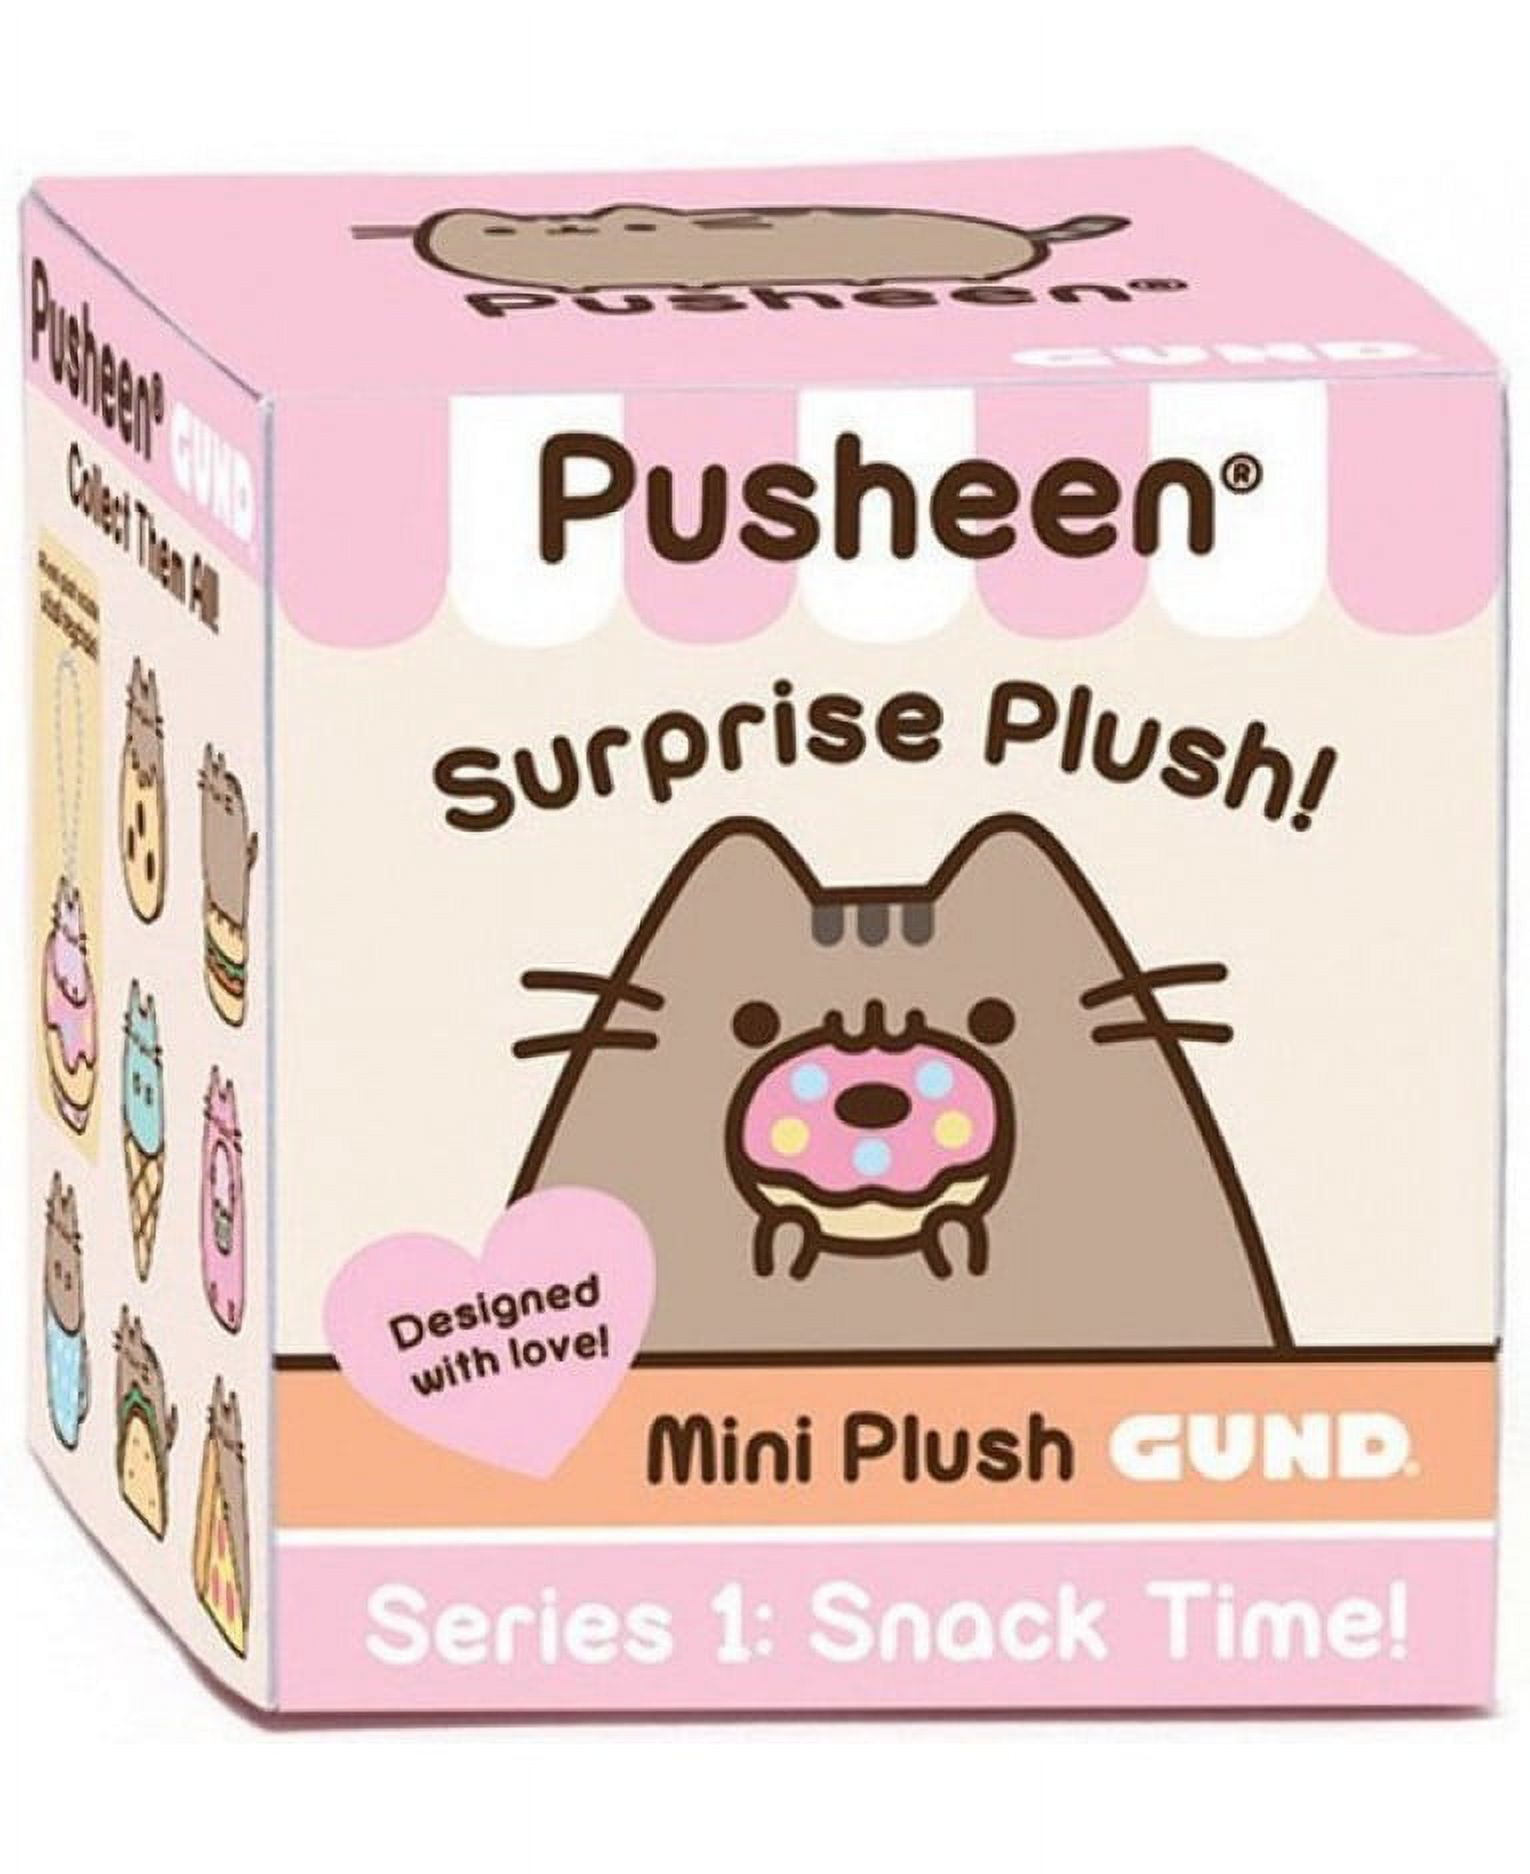 Gund Pusheen Surprise Plush Assortment #1 